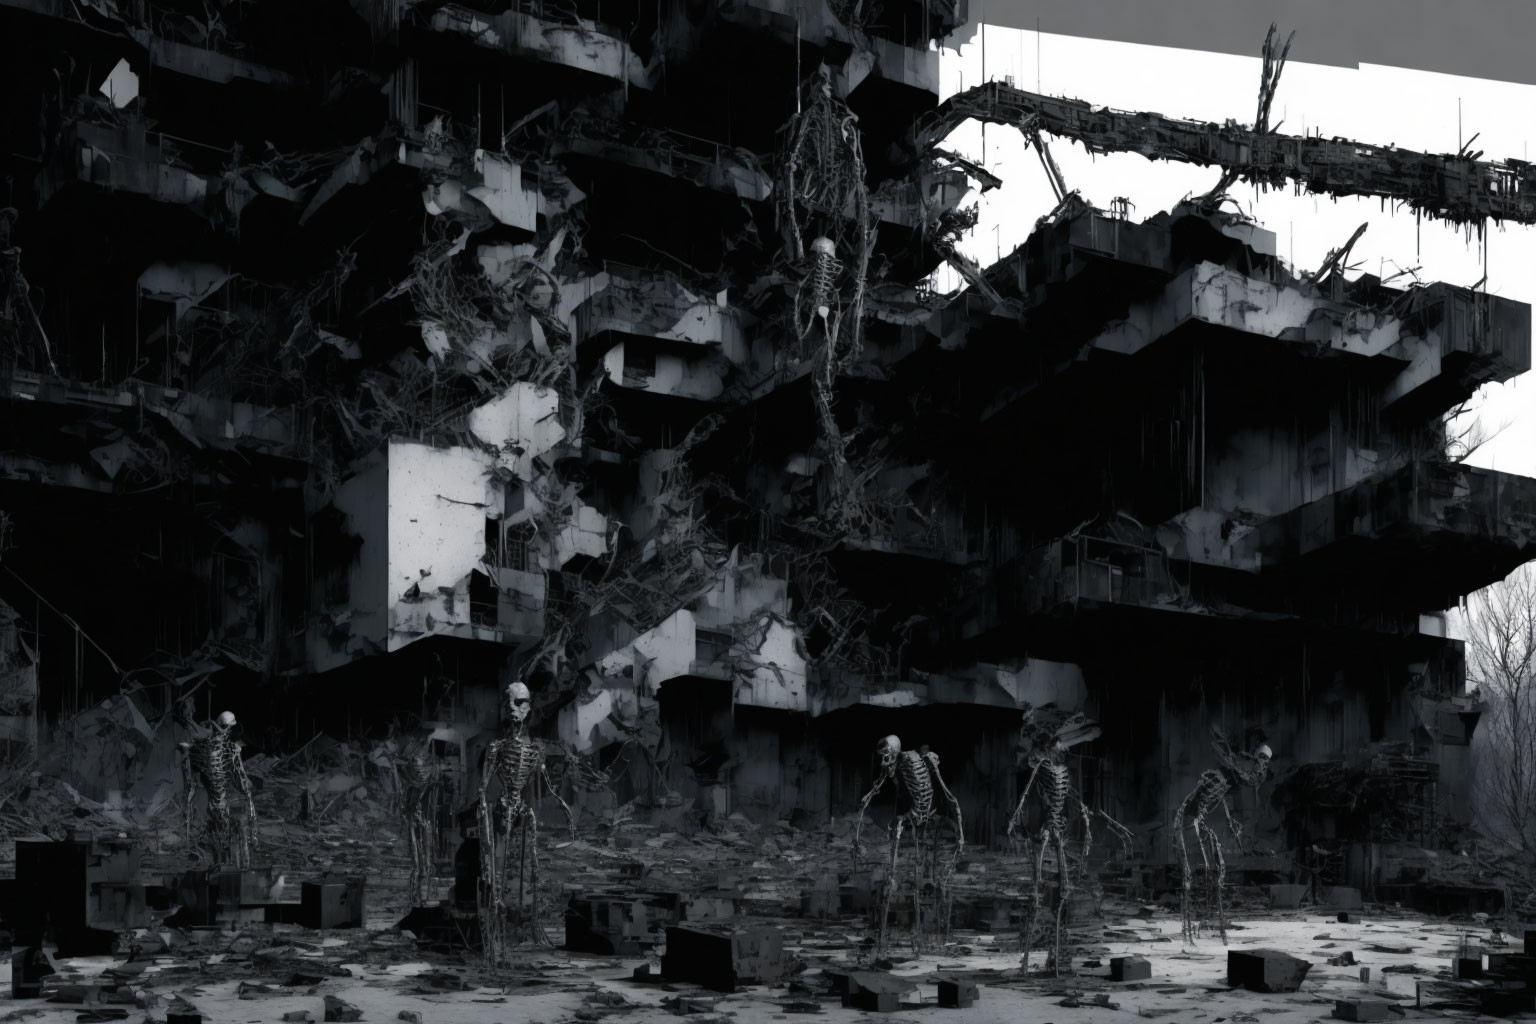 Dystopian landscape with skeletal figures in ruins